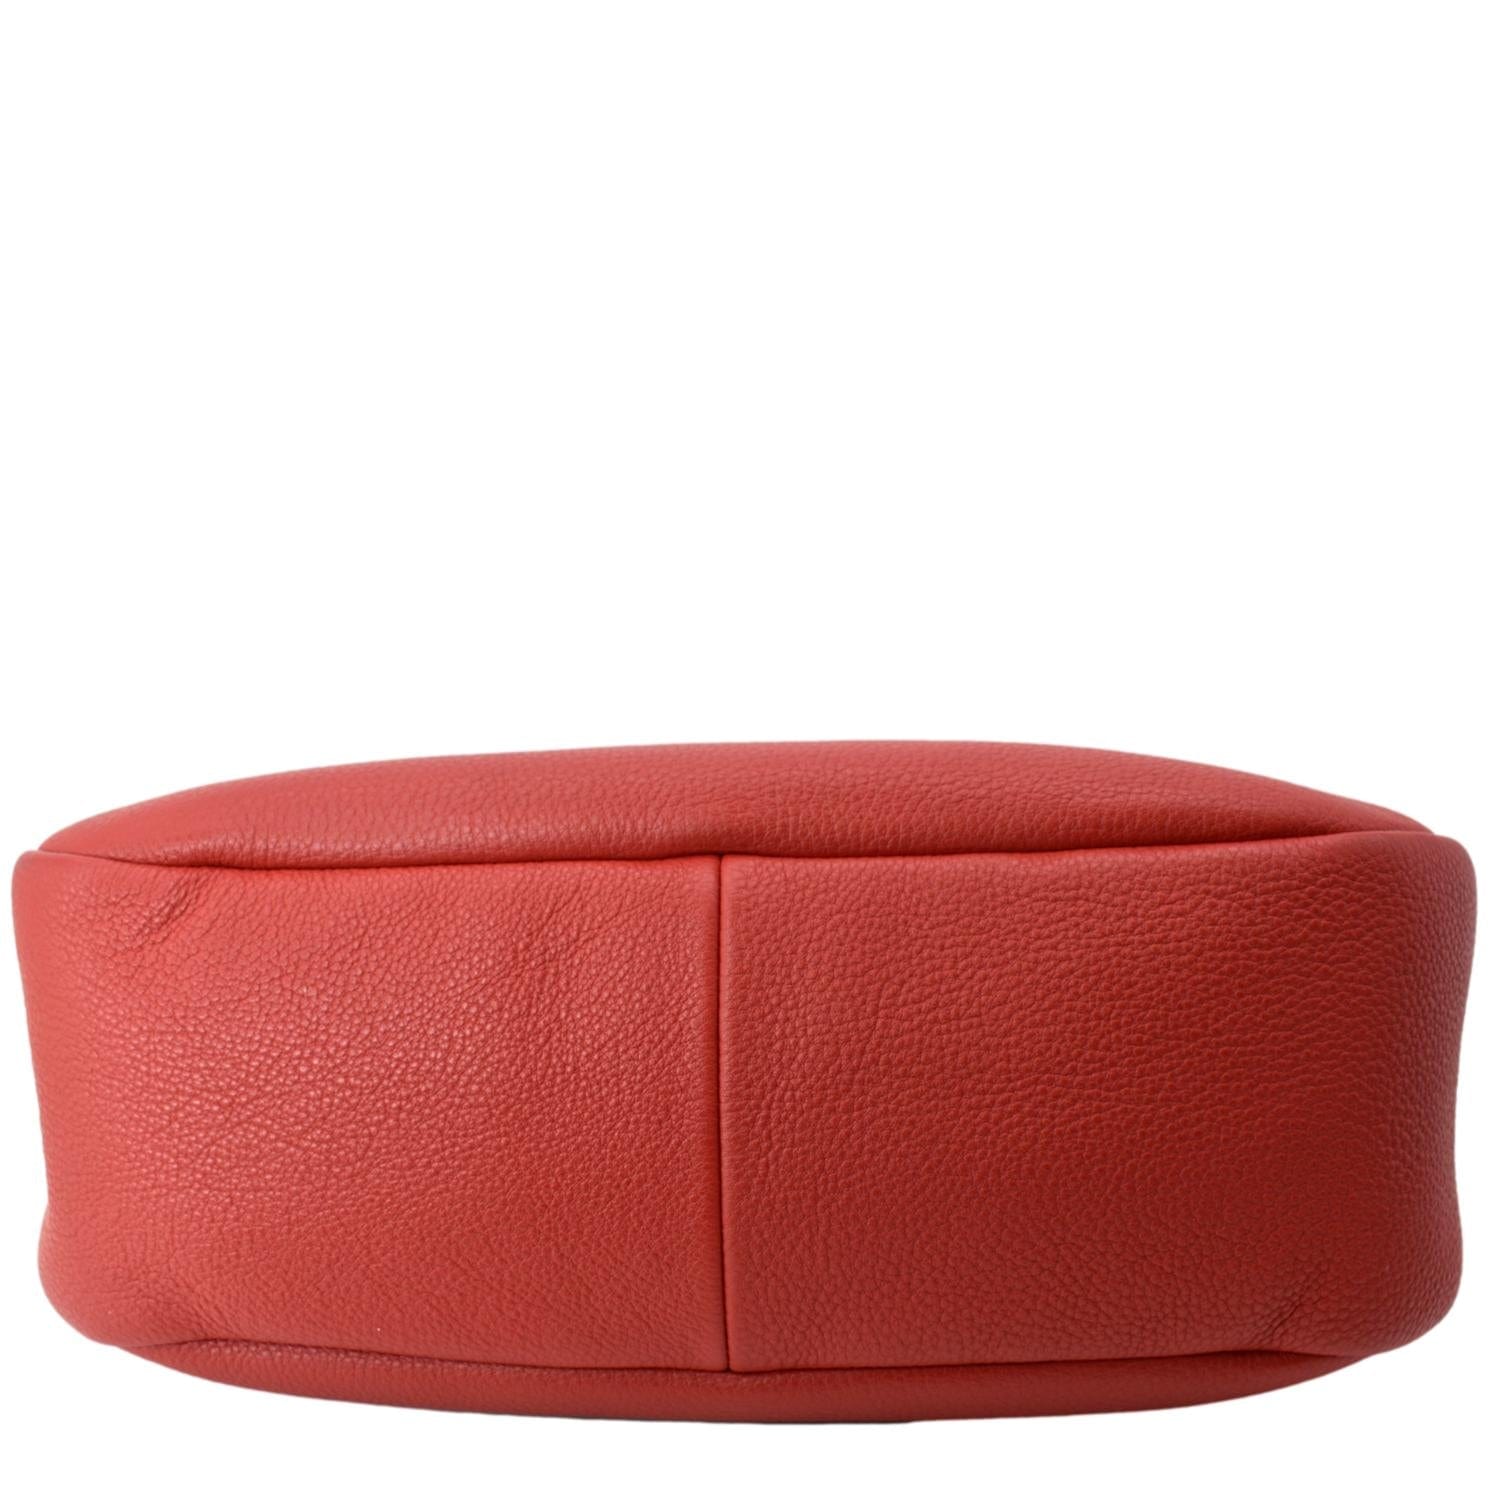 Red Prada Vitello Daino Small Flap Crossbody Bag – Designer Revival